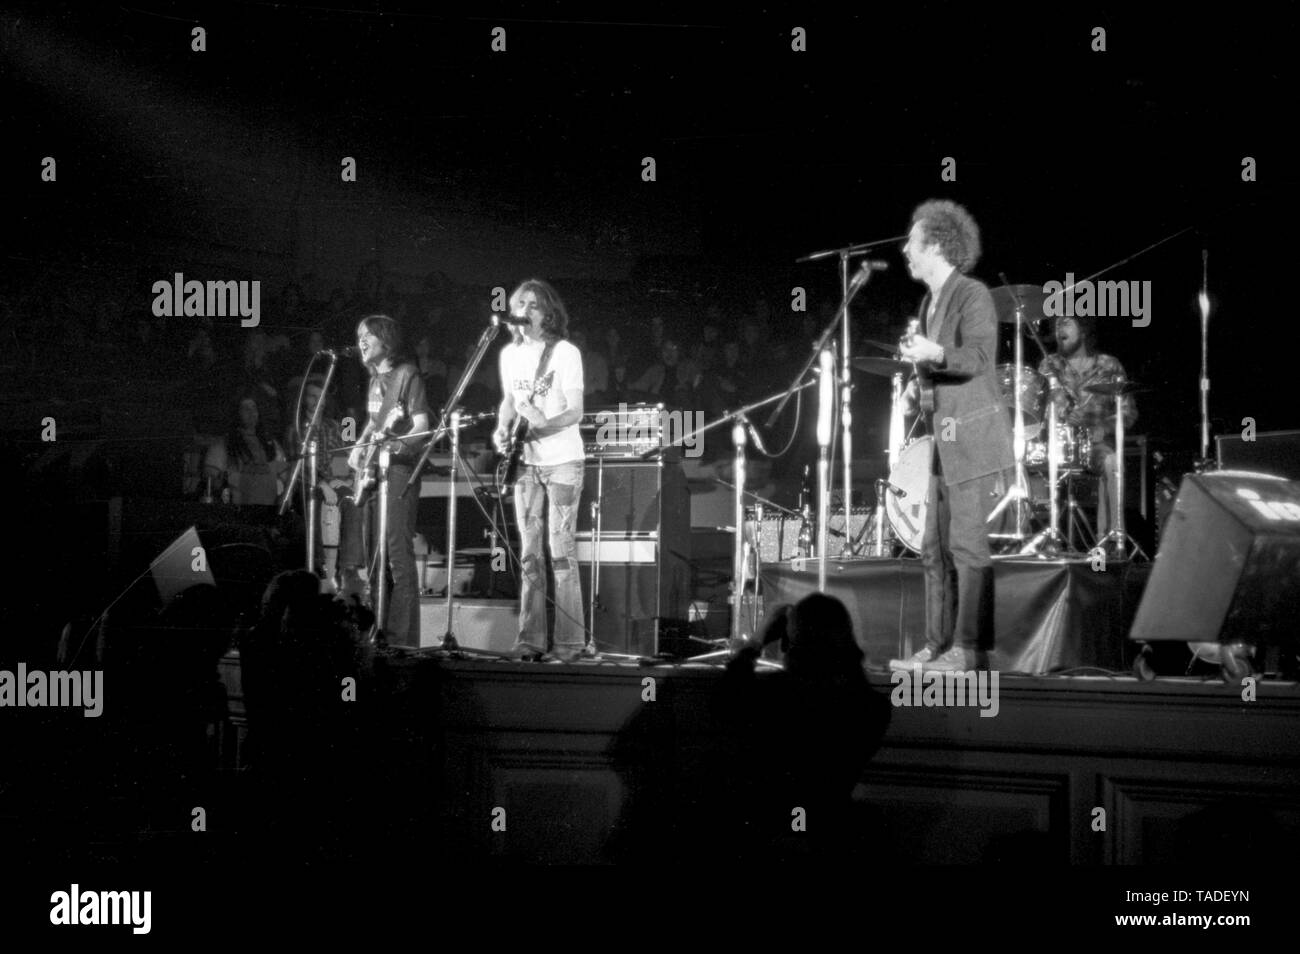 Amsterdam, Netherlands - 1st JANUARY: American group Eagles perform live on stage at Concertgebouw in Amsterdam, Netherlands in 1972. Left to right: Randy Meisner,Glenn Frey and Bernie Leadon. (Photo Gijsbert Hanekroot) Stock Photo